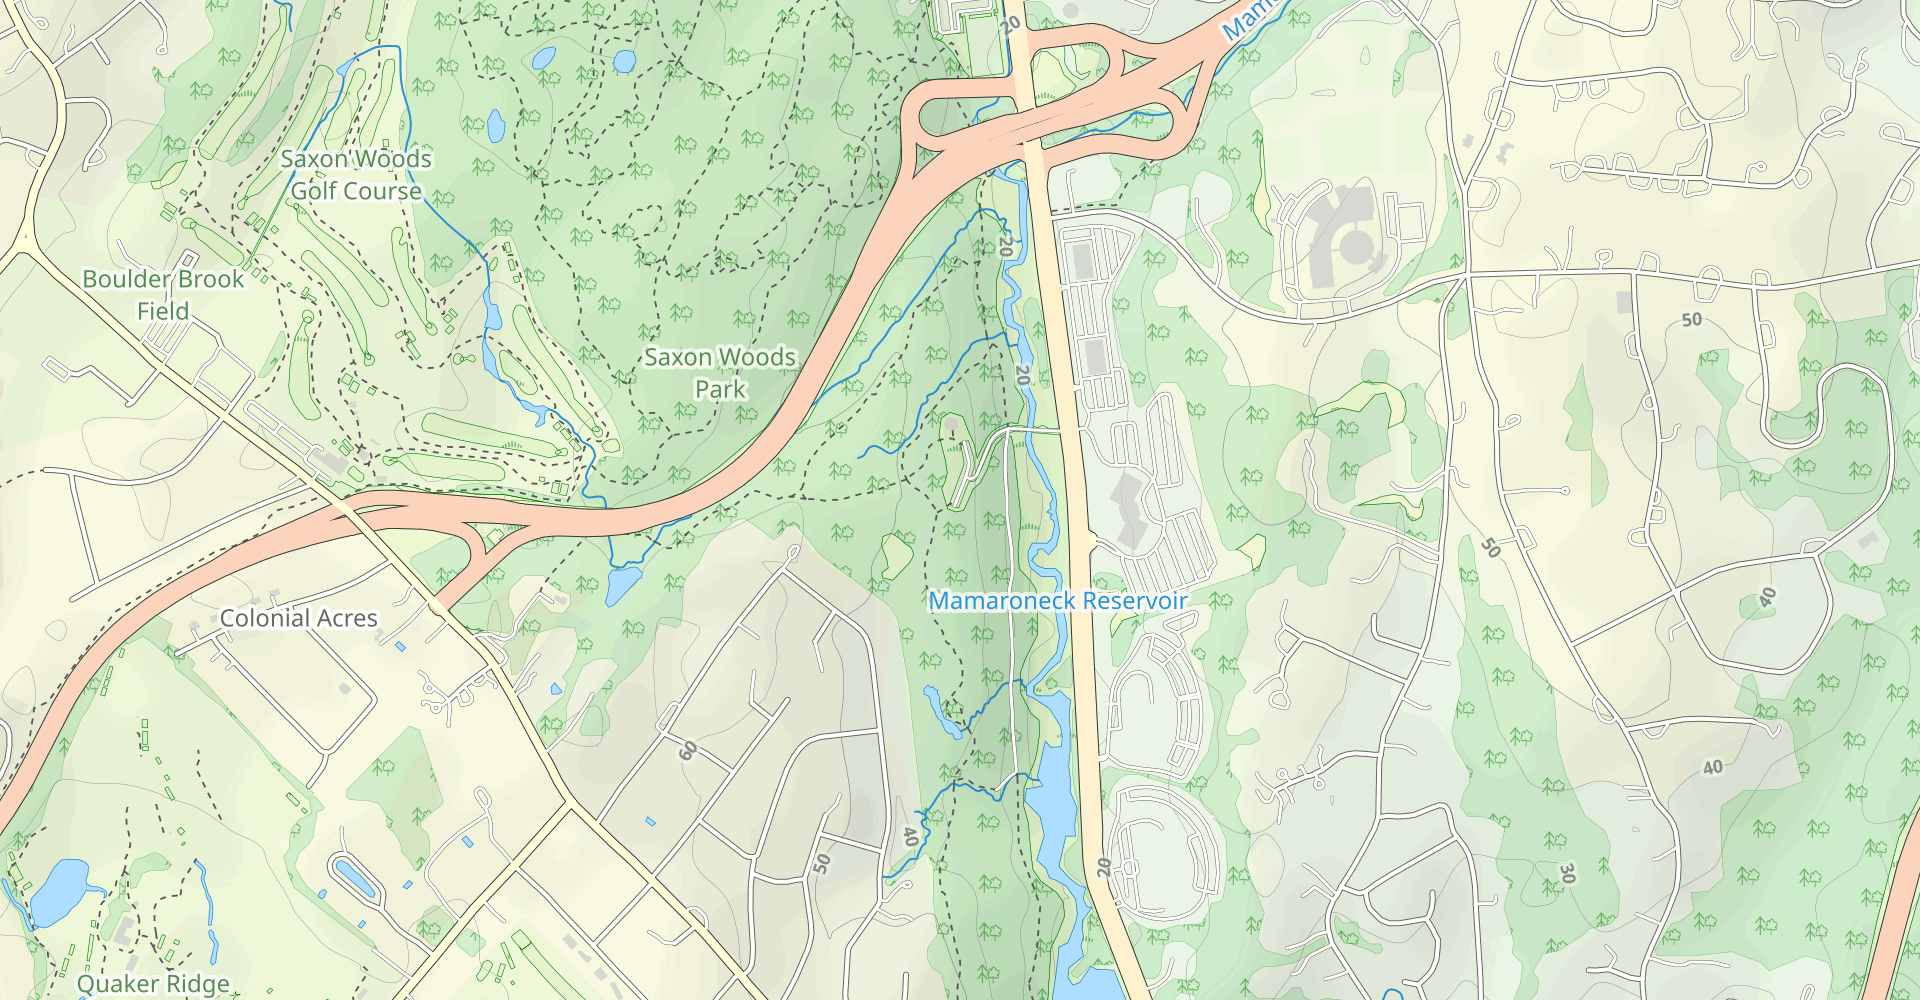 Mamaroneck Reservoir via Yellow Trail Loop